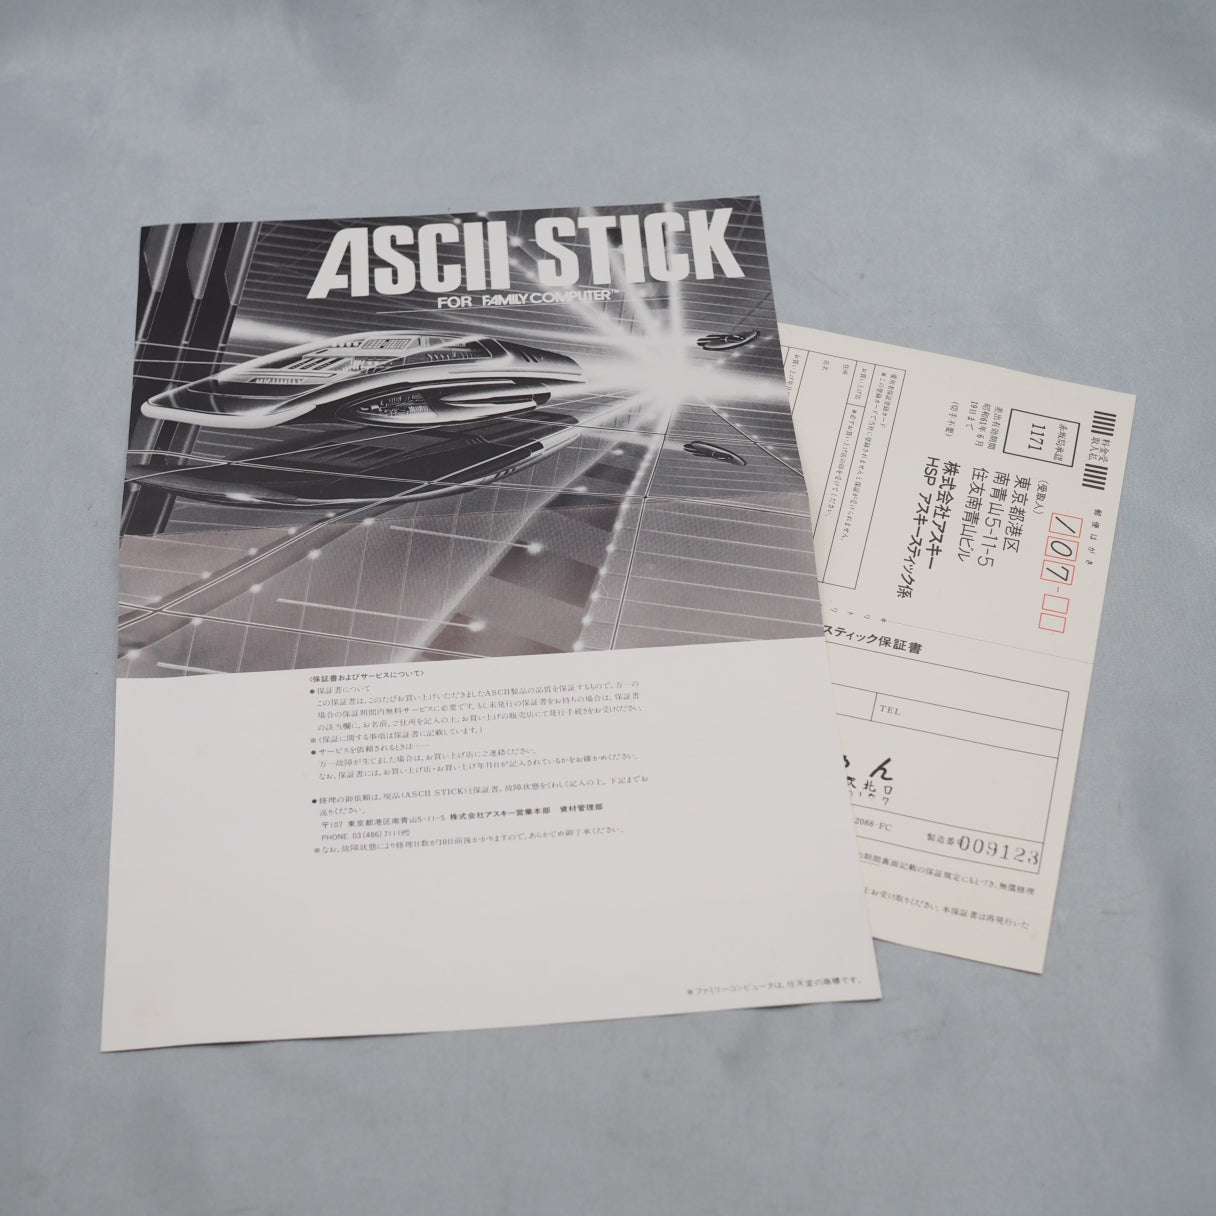 ASCII STICK Controller AS-2088-FC Boxed